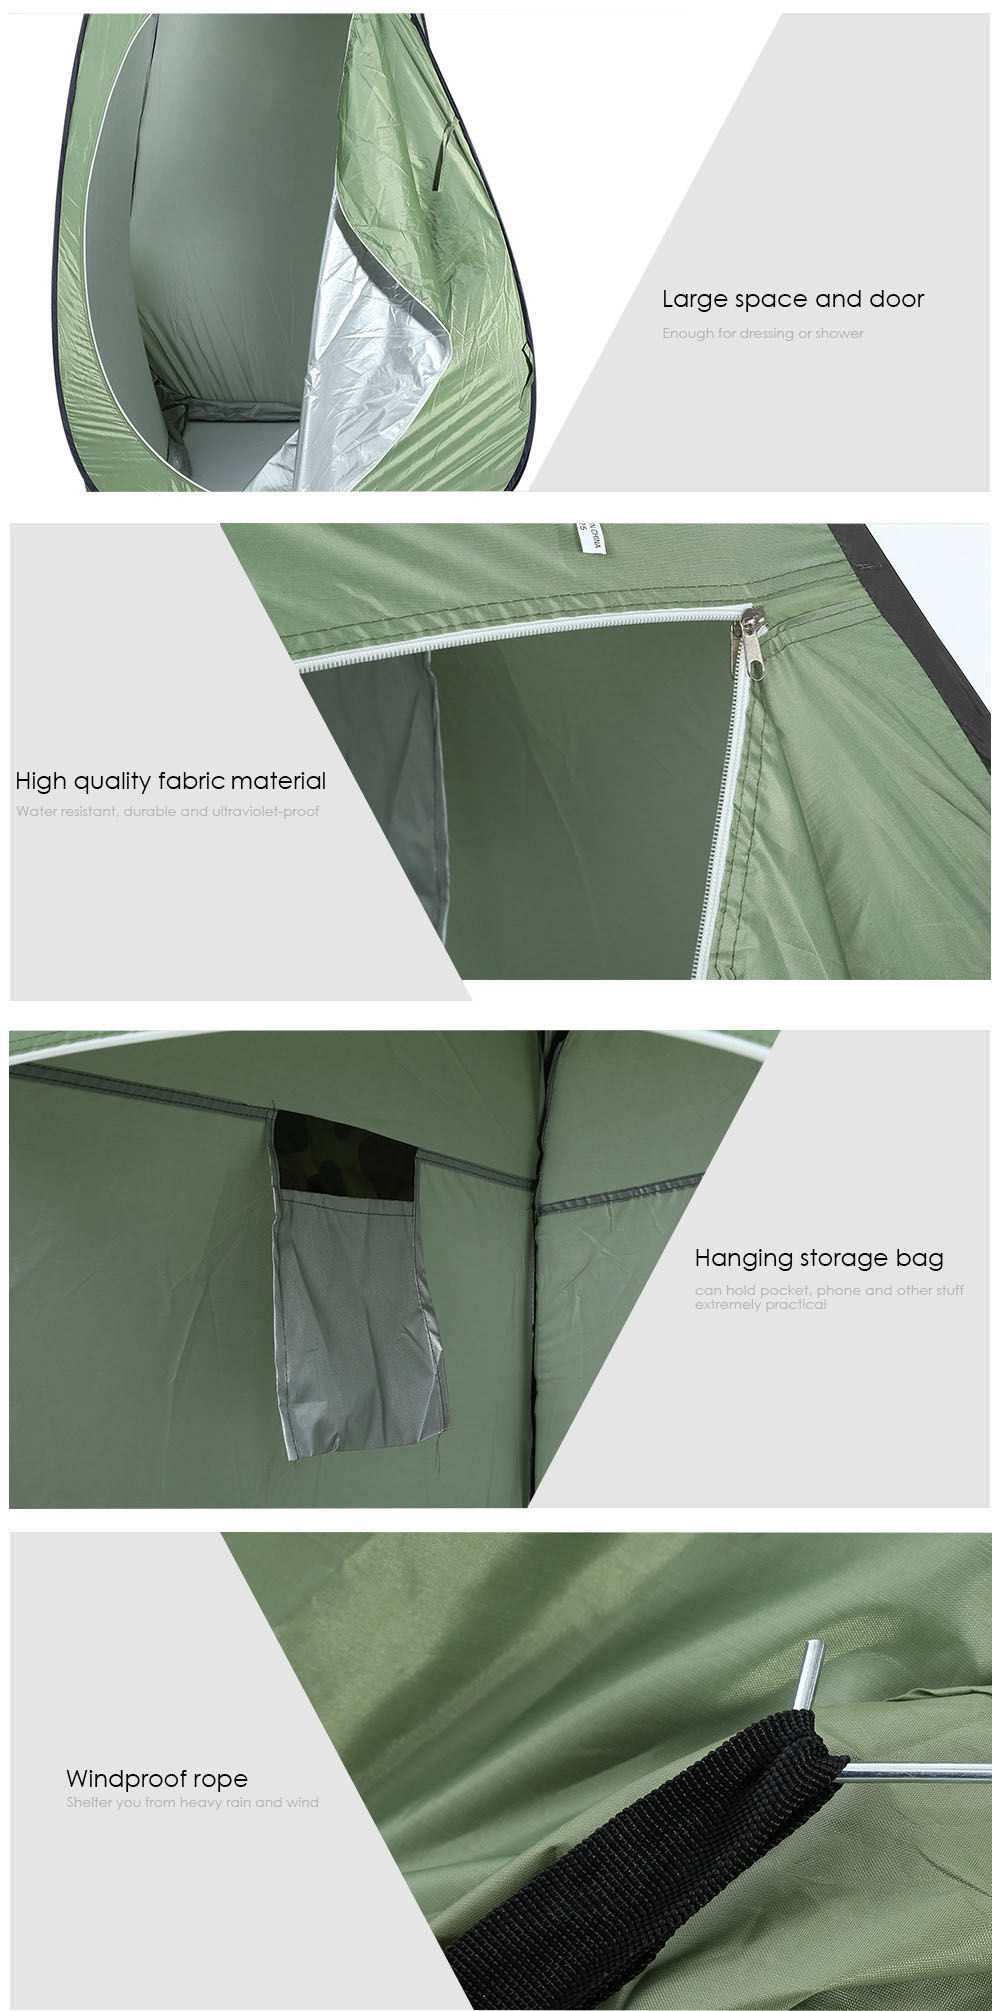 SHENGYUAN Multifunctional Bath Tent for Dressing Toilet Model Tabernacle